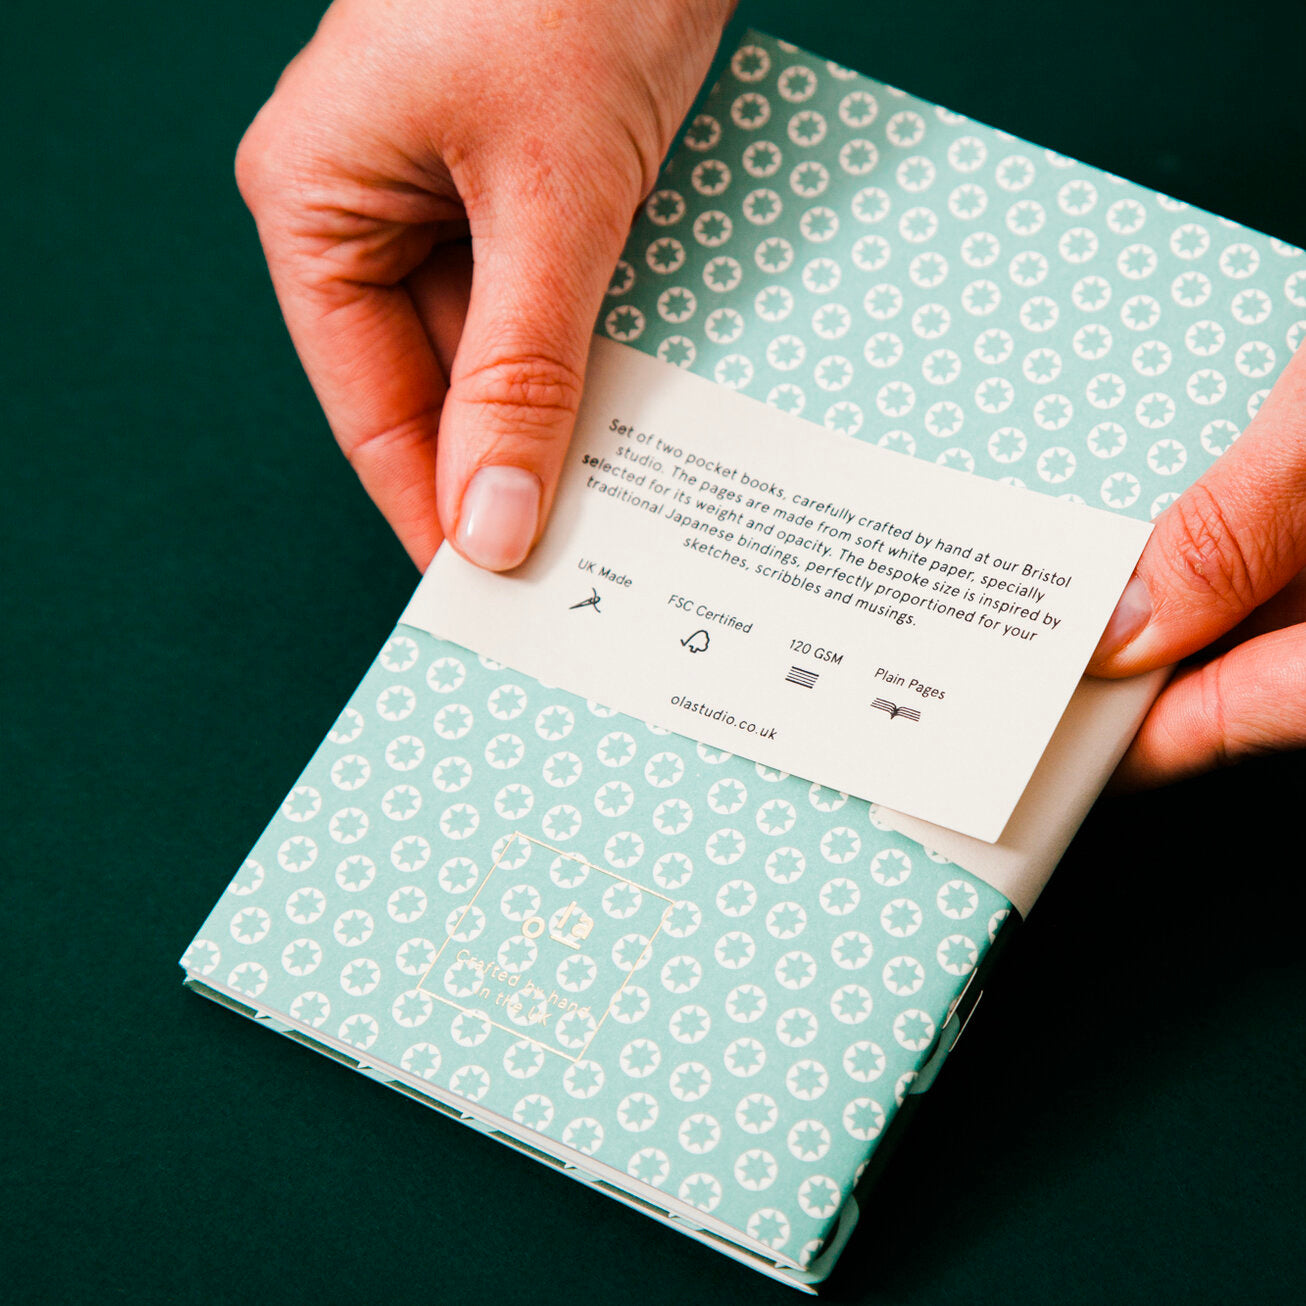 Set of 2 Handcrafted Pocket Books -  Enid & Kaffe print